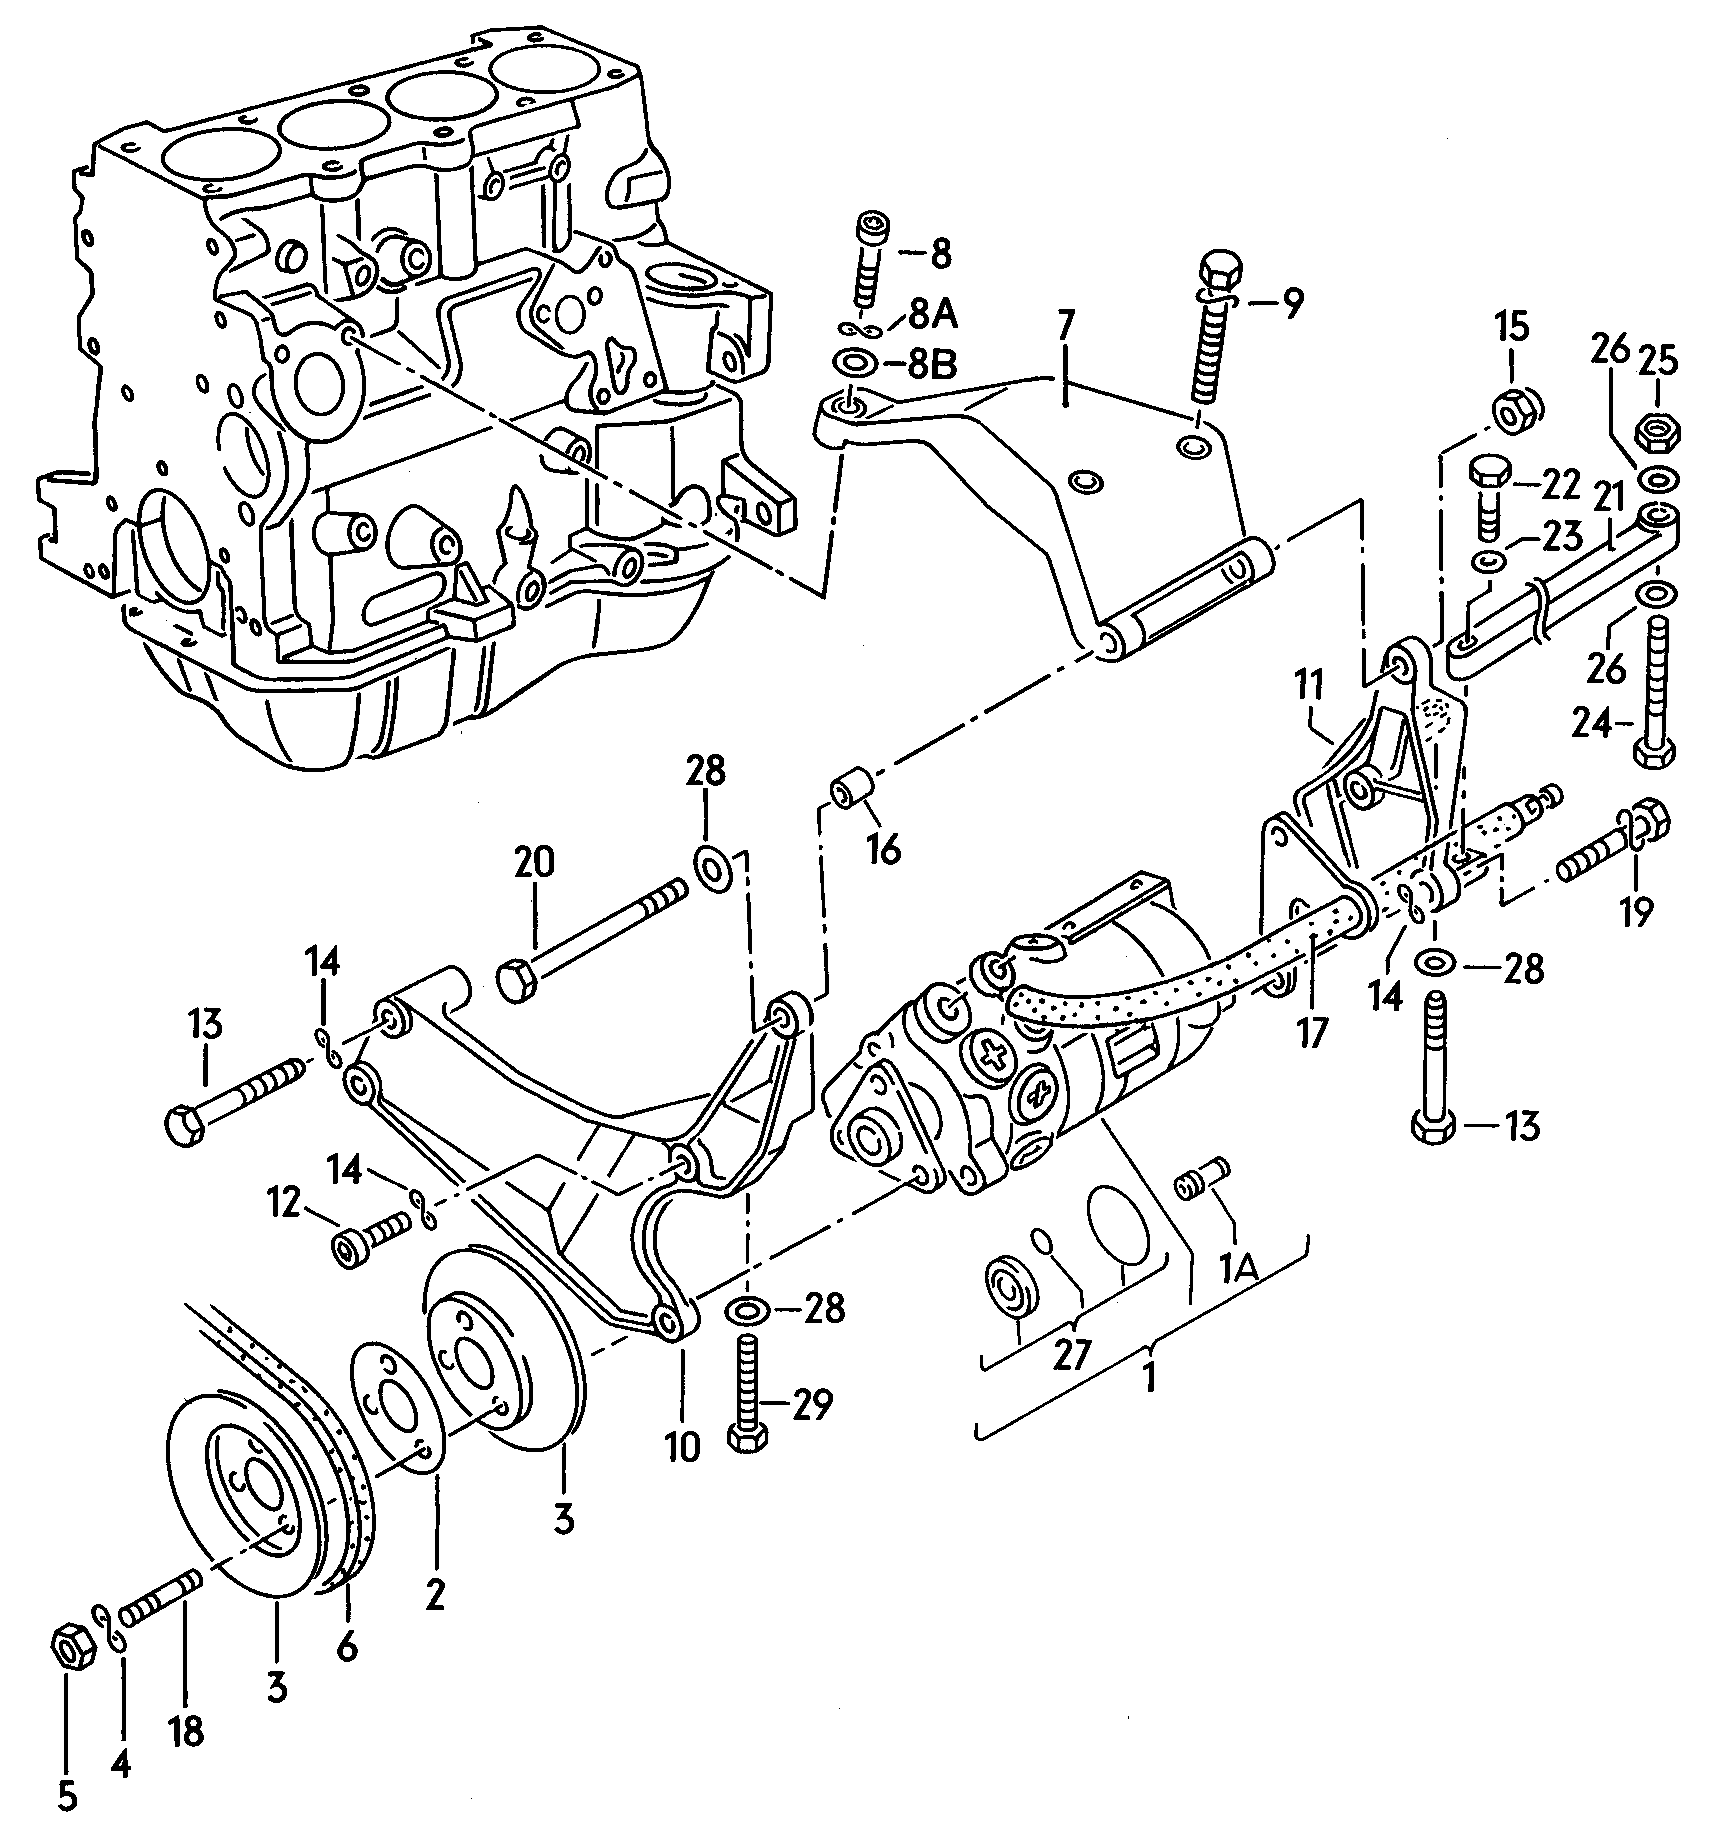 central hydraulic pumpfor power steering 1.8ltr. - Audi 100/Avant quattro - a10q